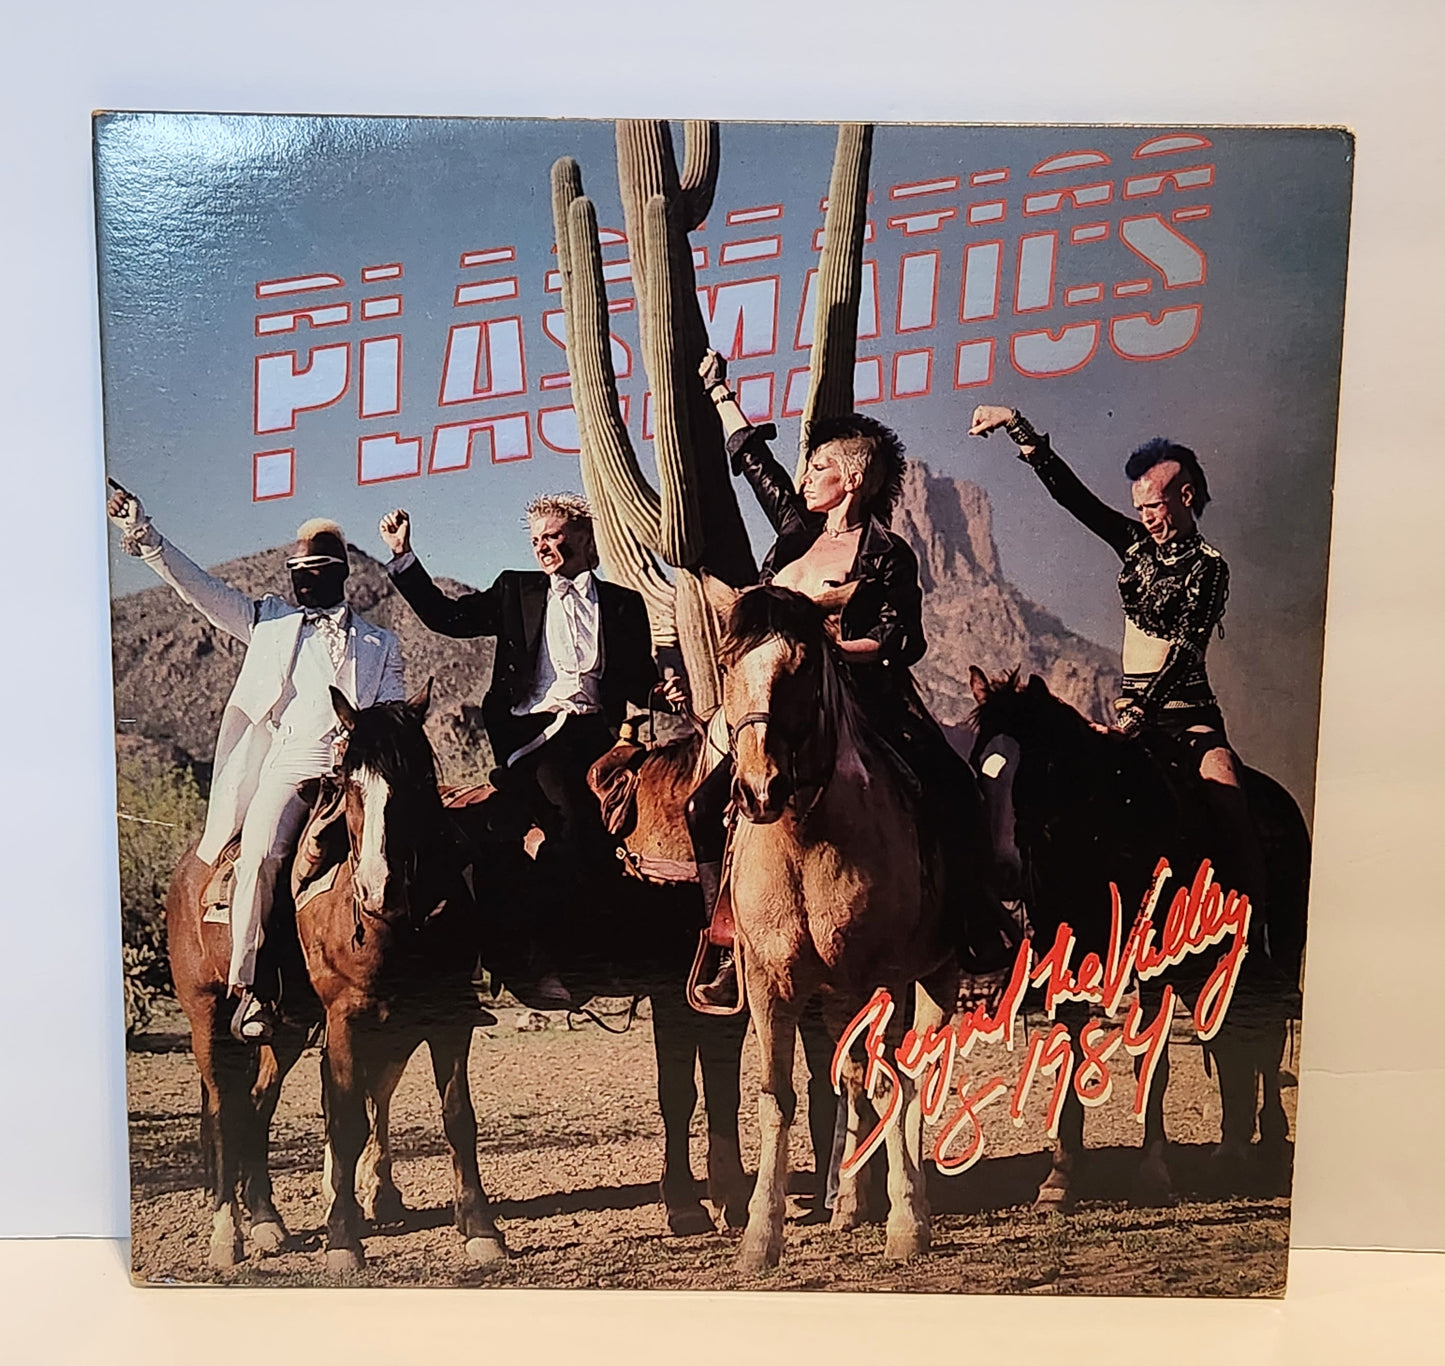 Plasmatics "Beyond The Valley of 1984" 1981 Punk Rock Record Album